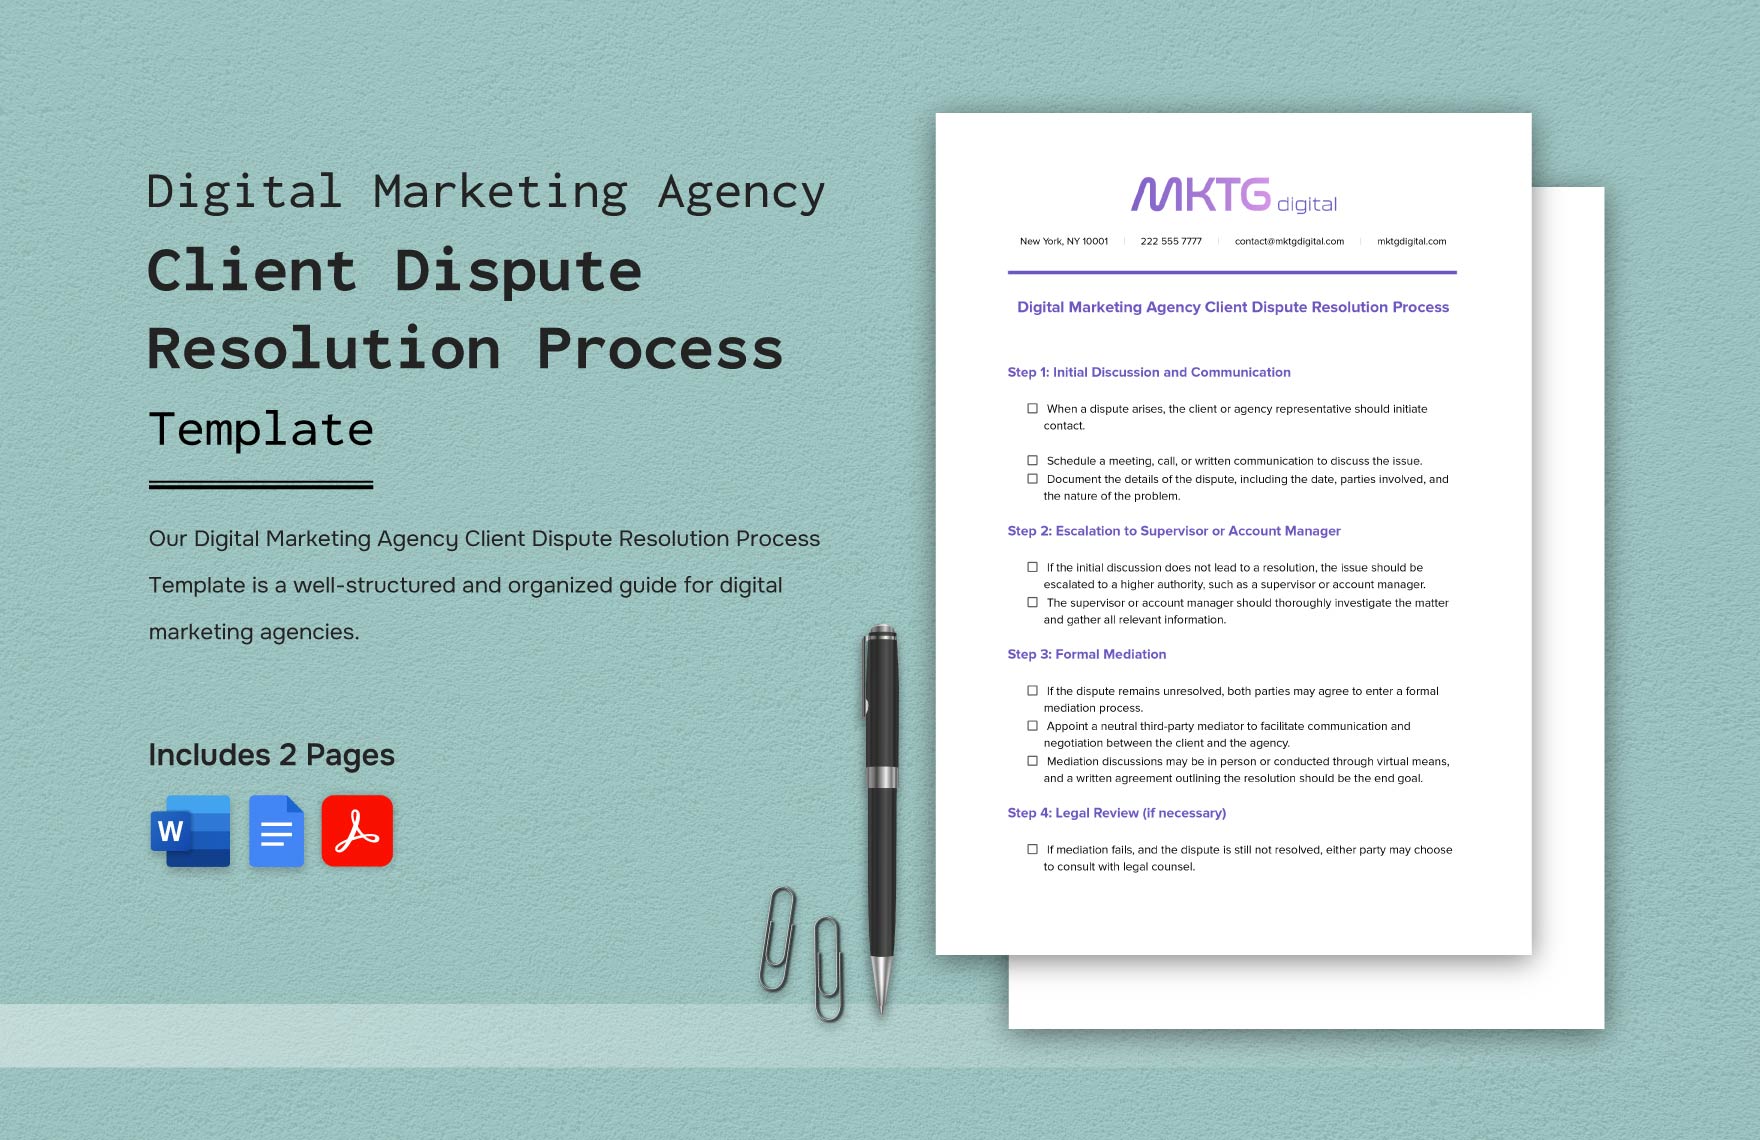 Digital Marketing Agency Client Dispute Resolution Process Template